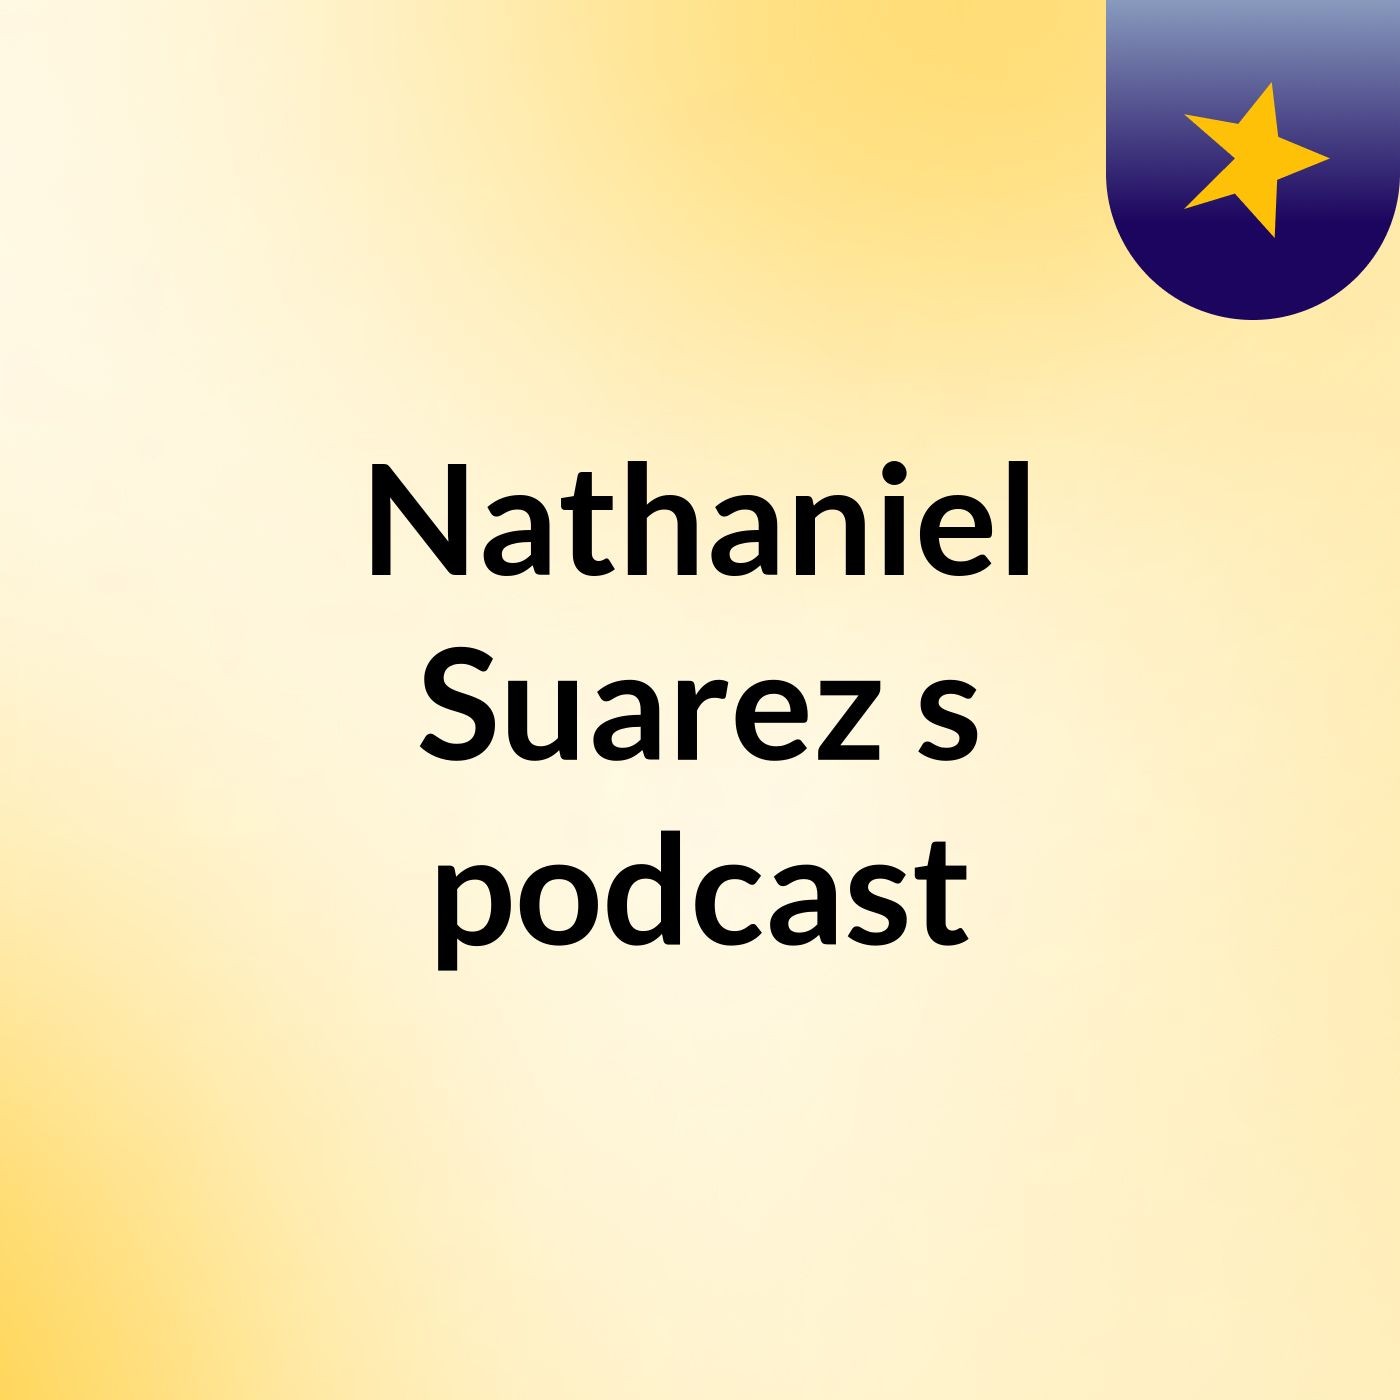 Nathaniel Suarez's podcast